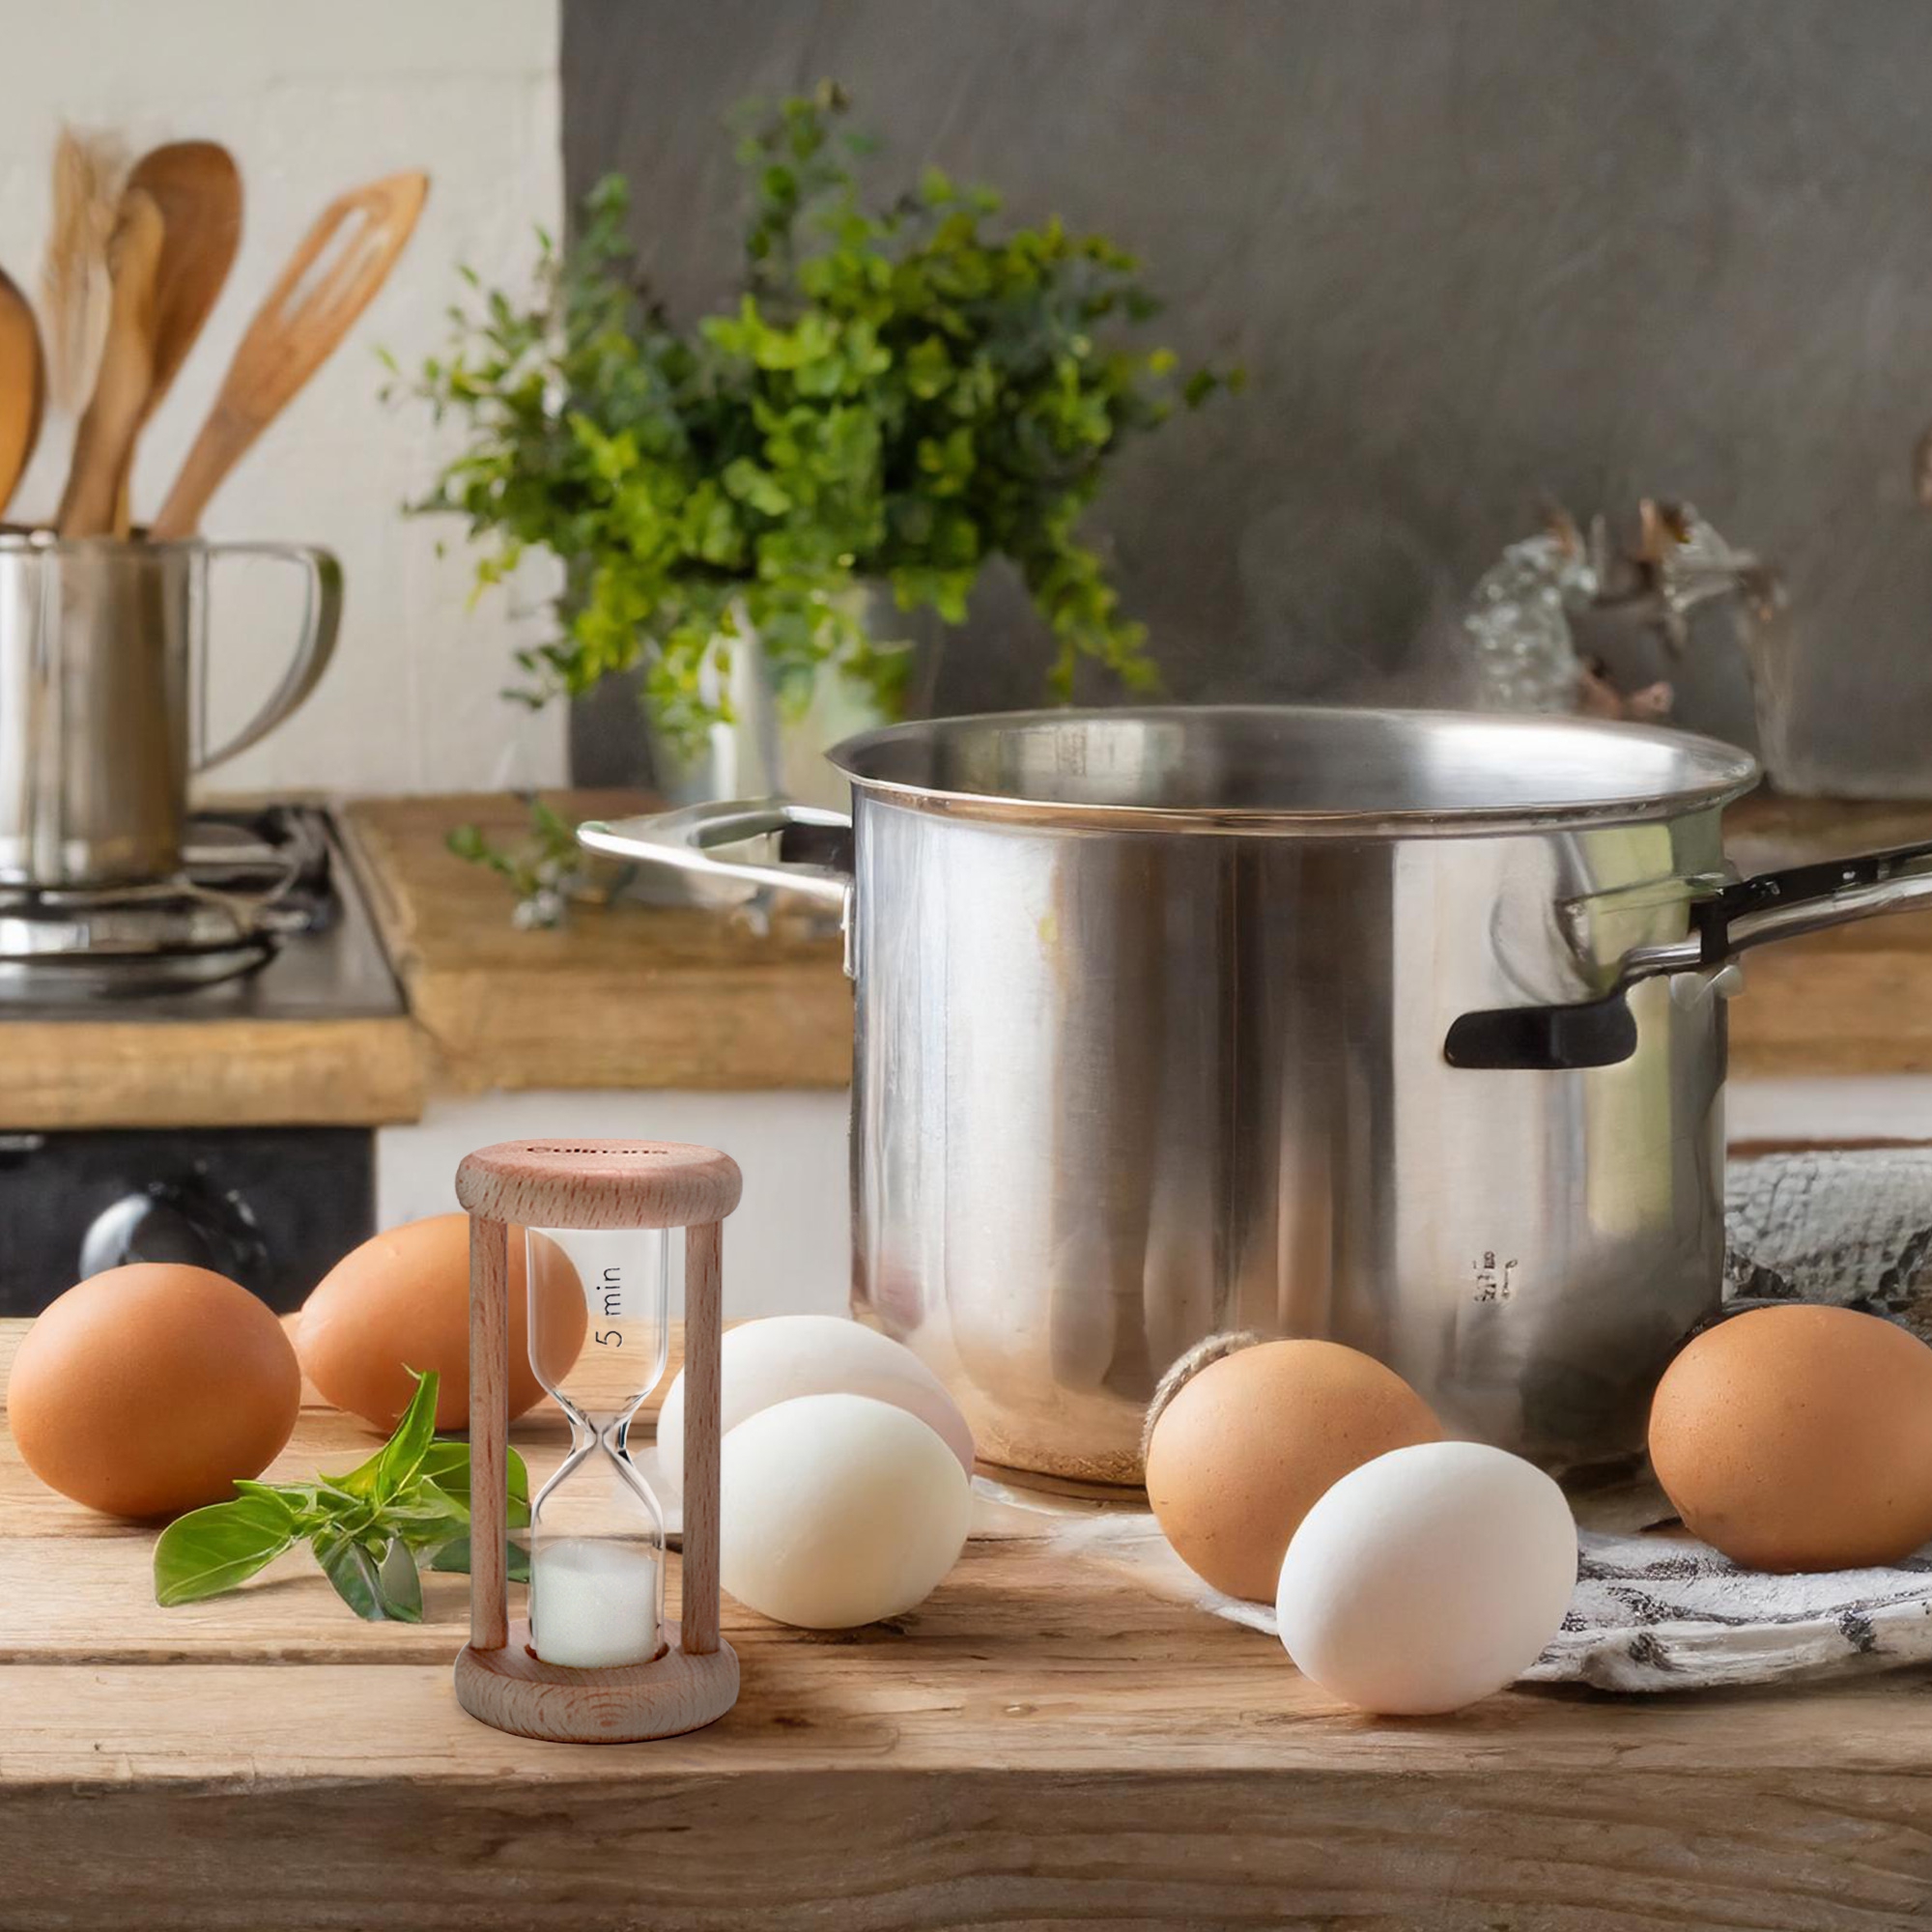 Culinaris - egg hourglass - 5 minutes